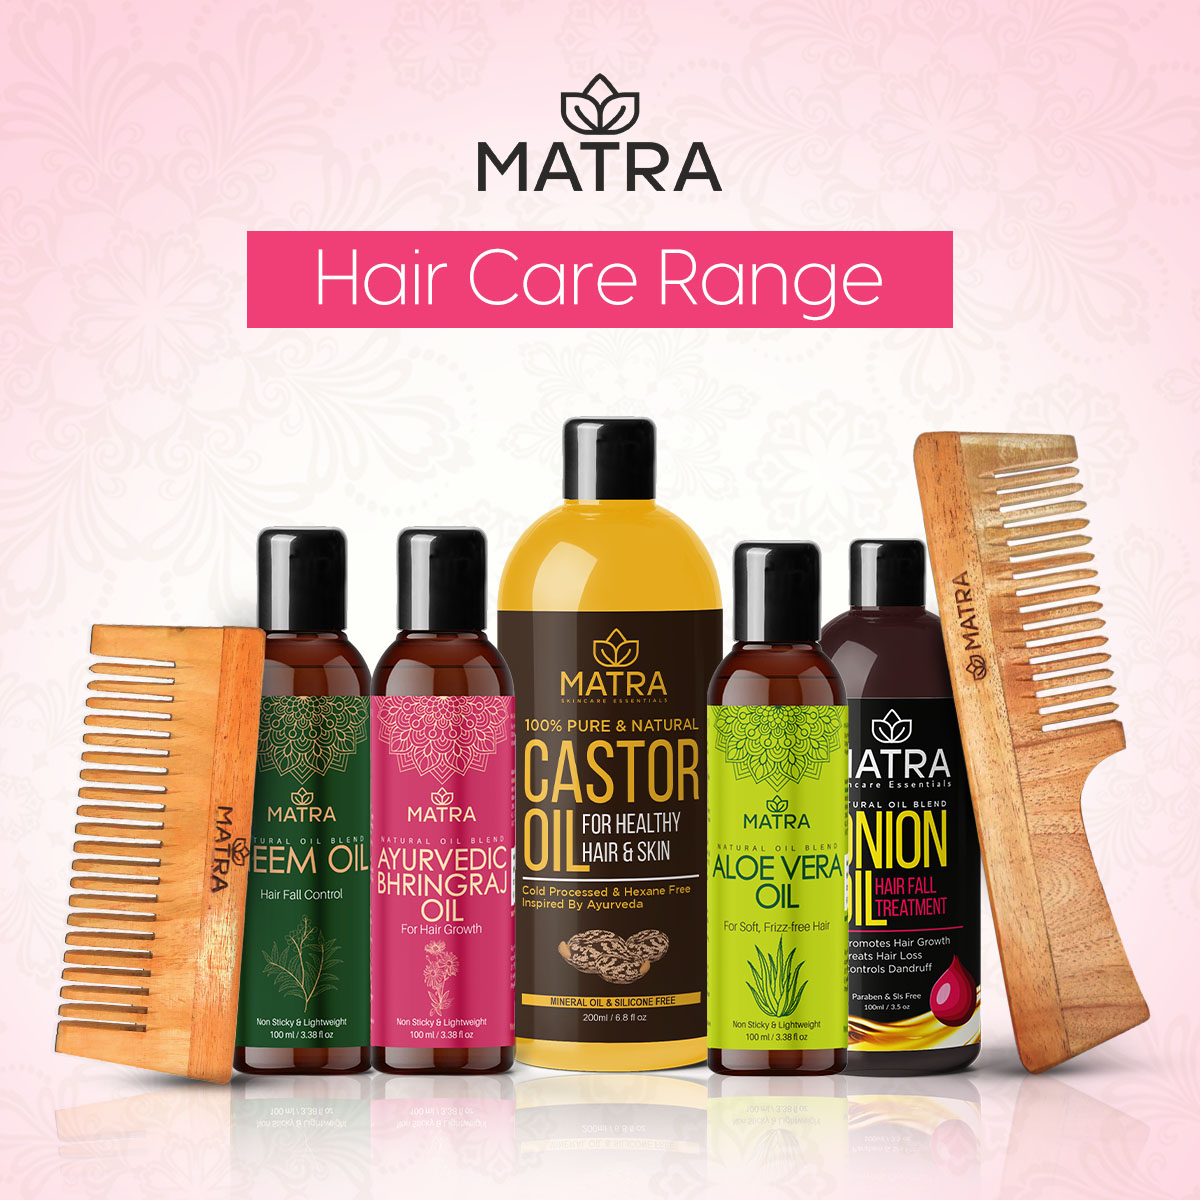 Matra Aloe Vera Hair Oil for Strong, Soft, Frizz-free Hair 